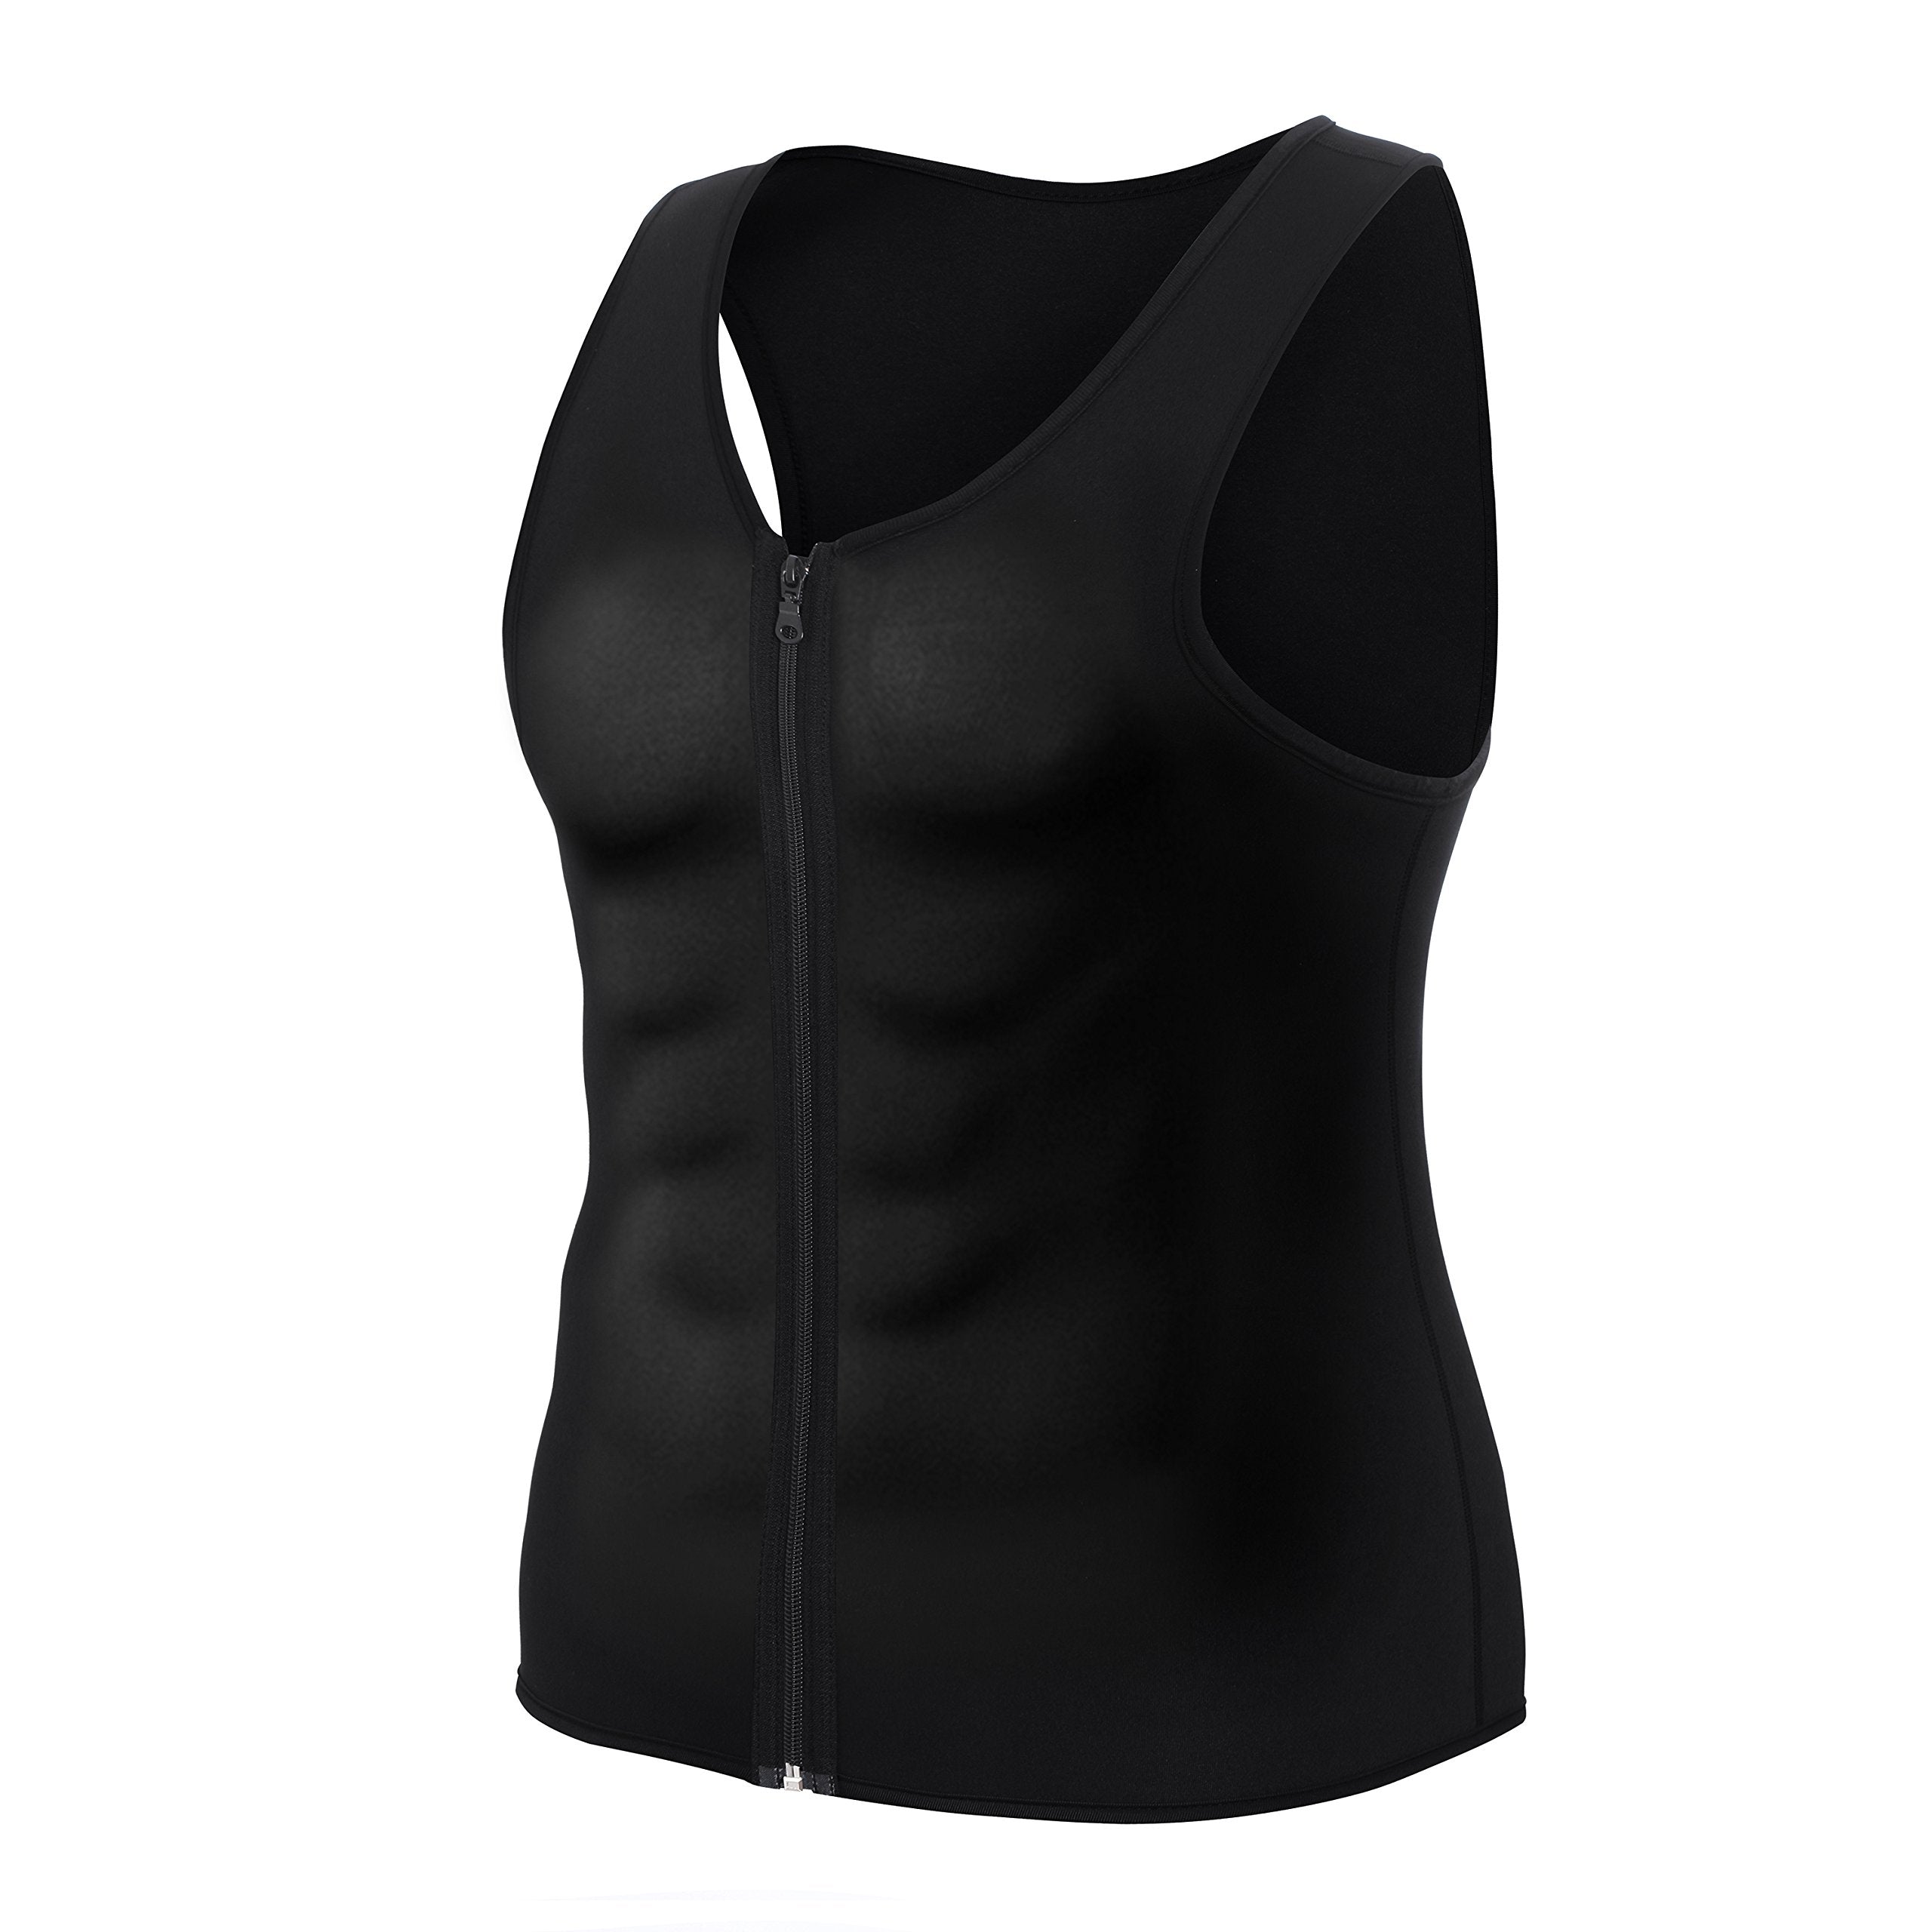 Men Waist Trainer Vest for Weightloss Hot Neoprene Corset Body Shaper Zipper Sauna Tank Top Workout Shirt (L, Black Neoprene Slimming Vest)